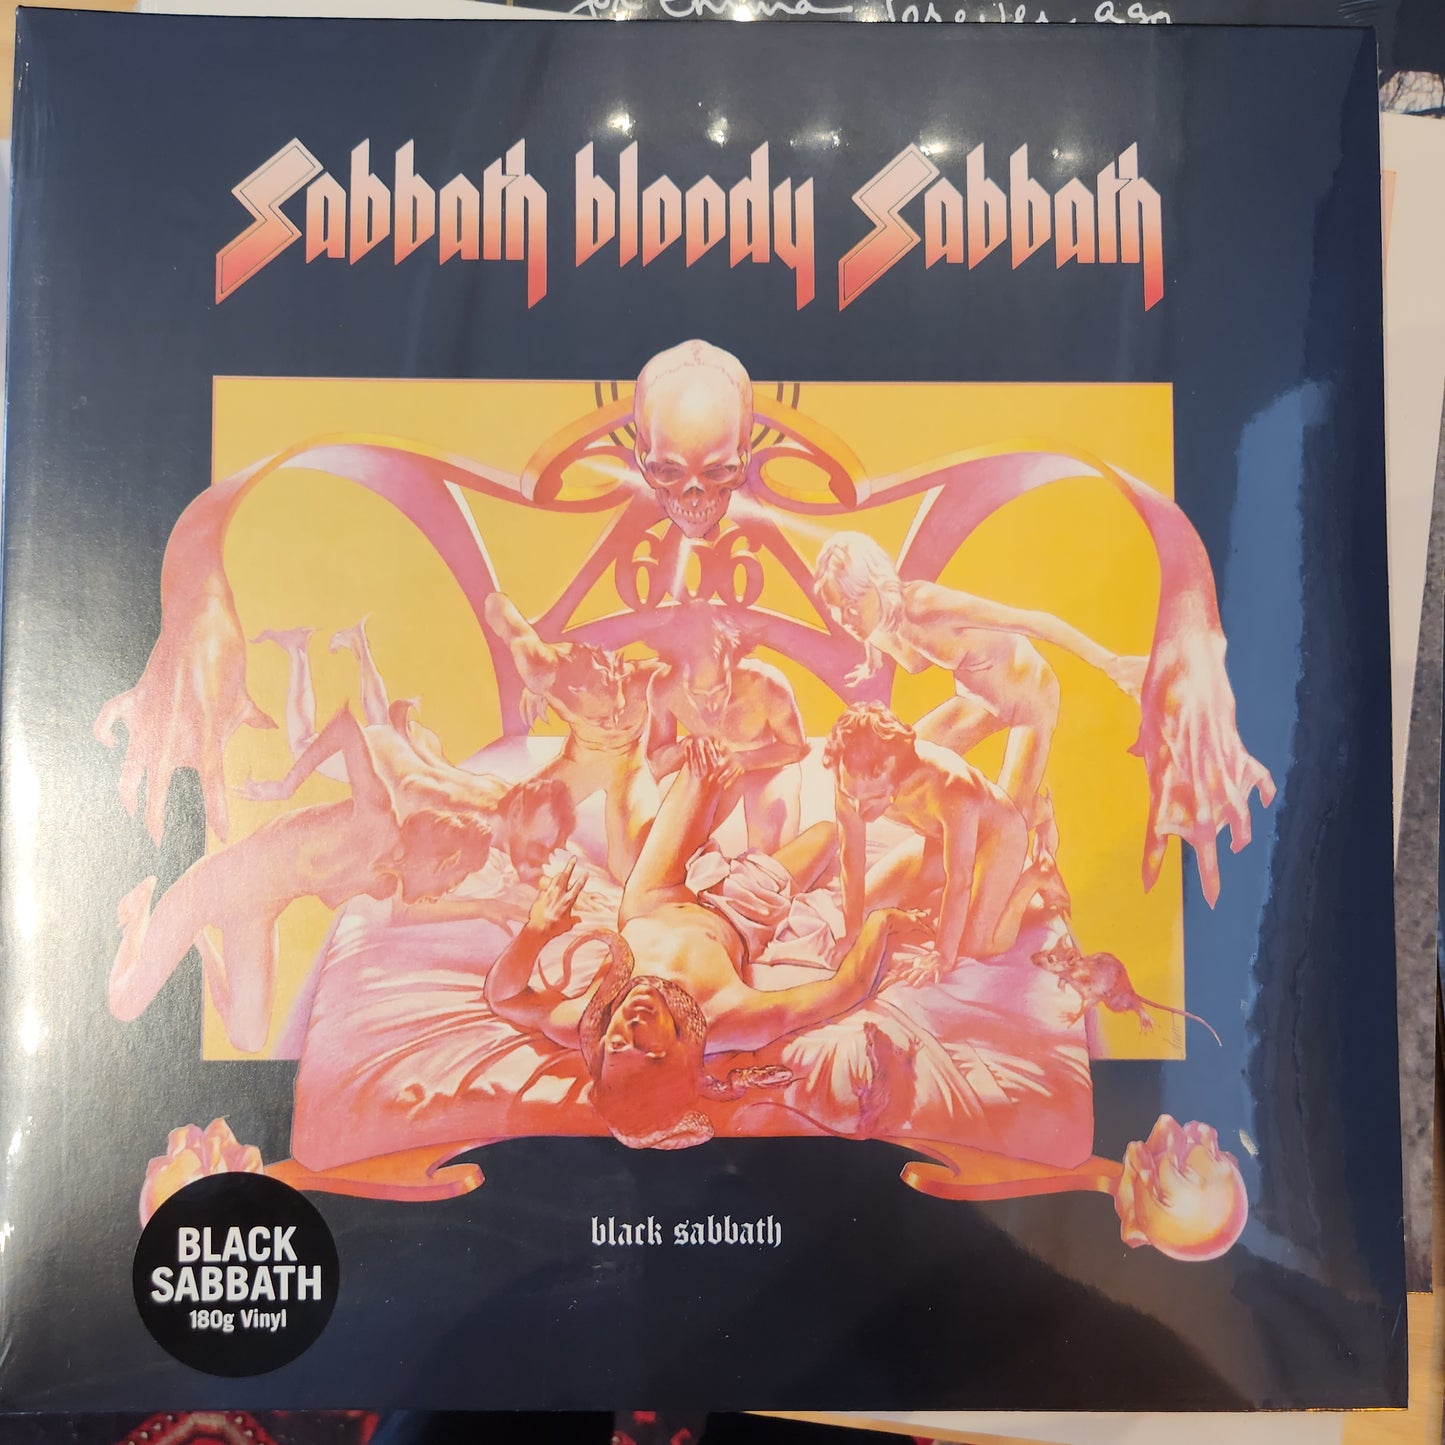 Black Sabbath - Sabbath Bloody Sabbath - Vinyl LP